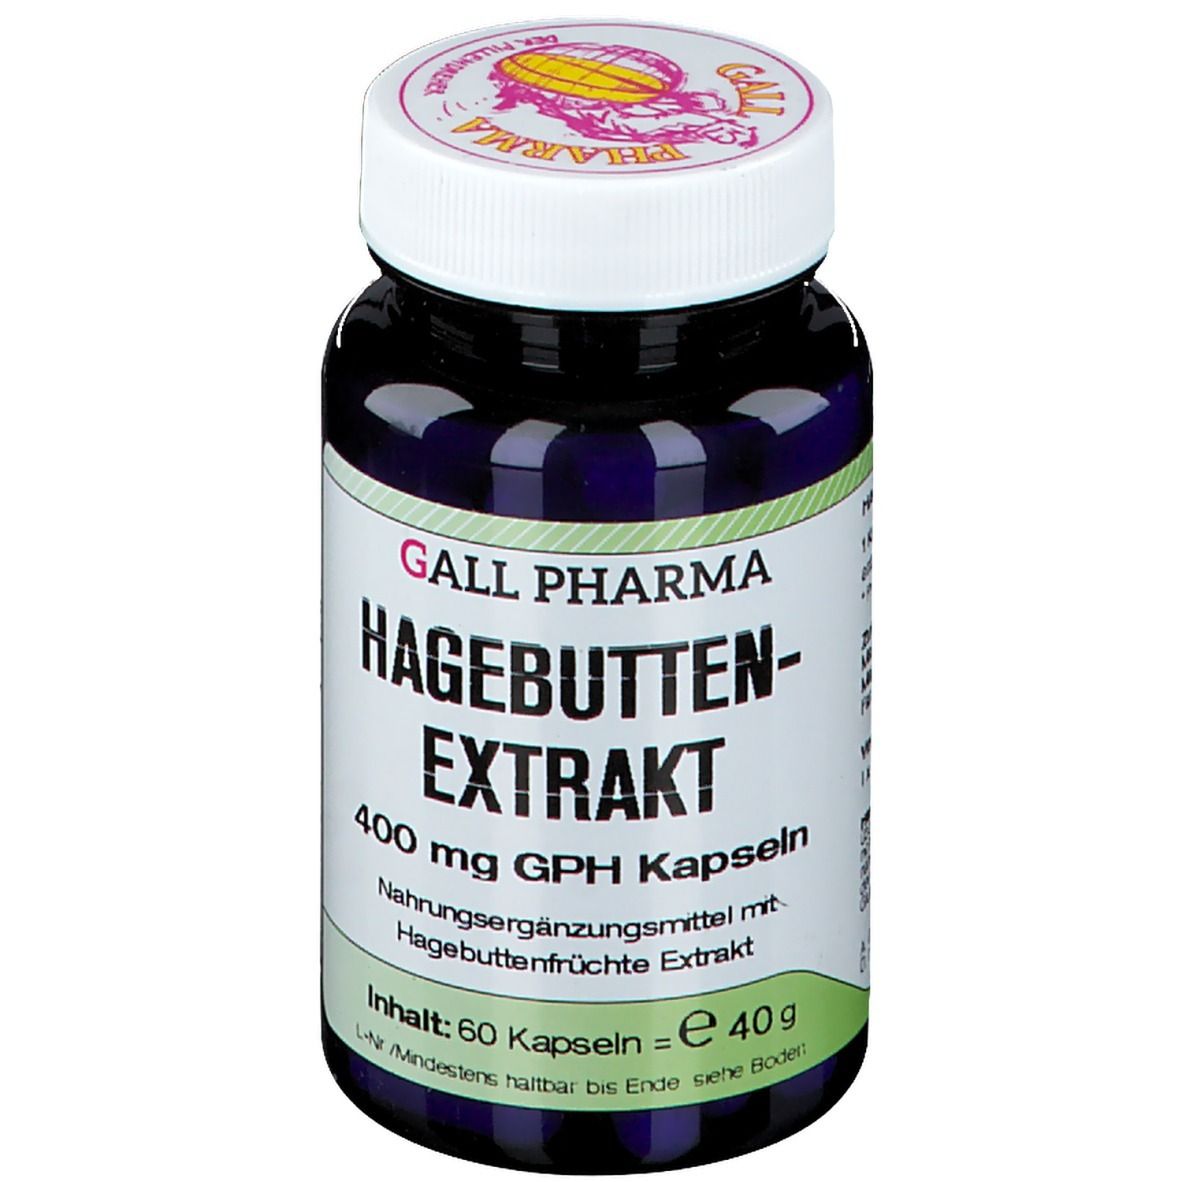 GALL PHARMA Hagebuttenextrakt 400 mg GPH Kapseln